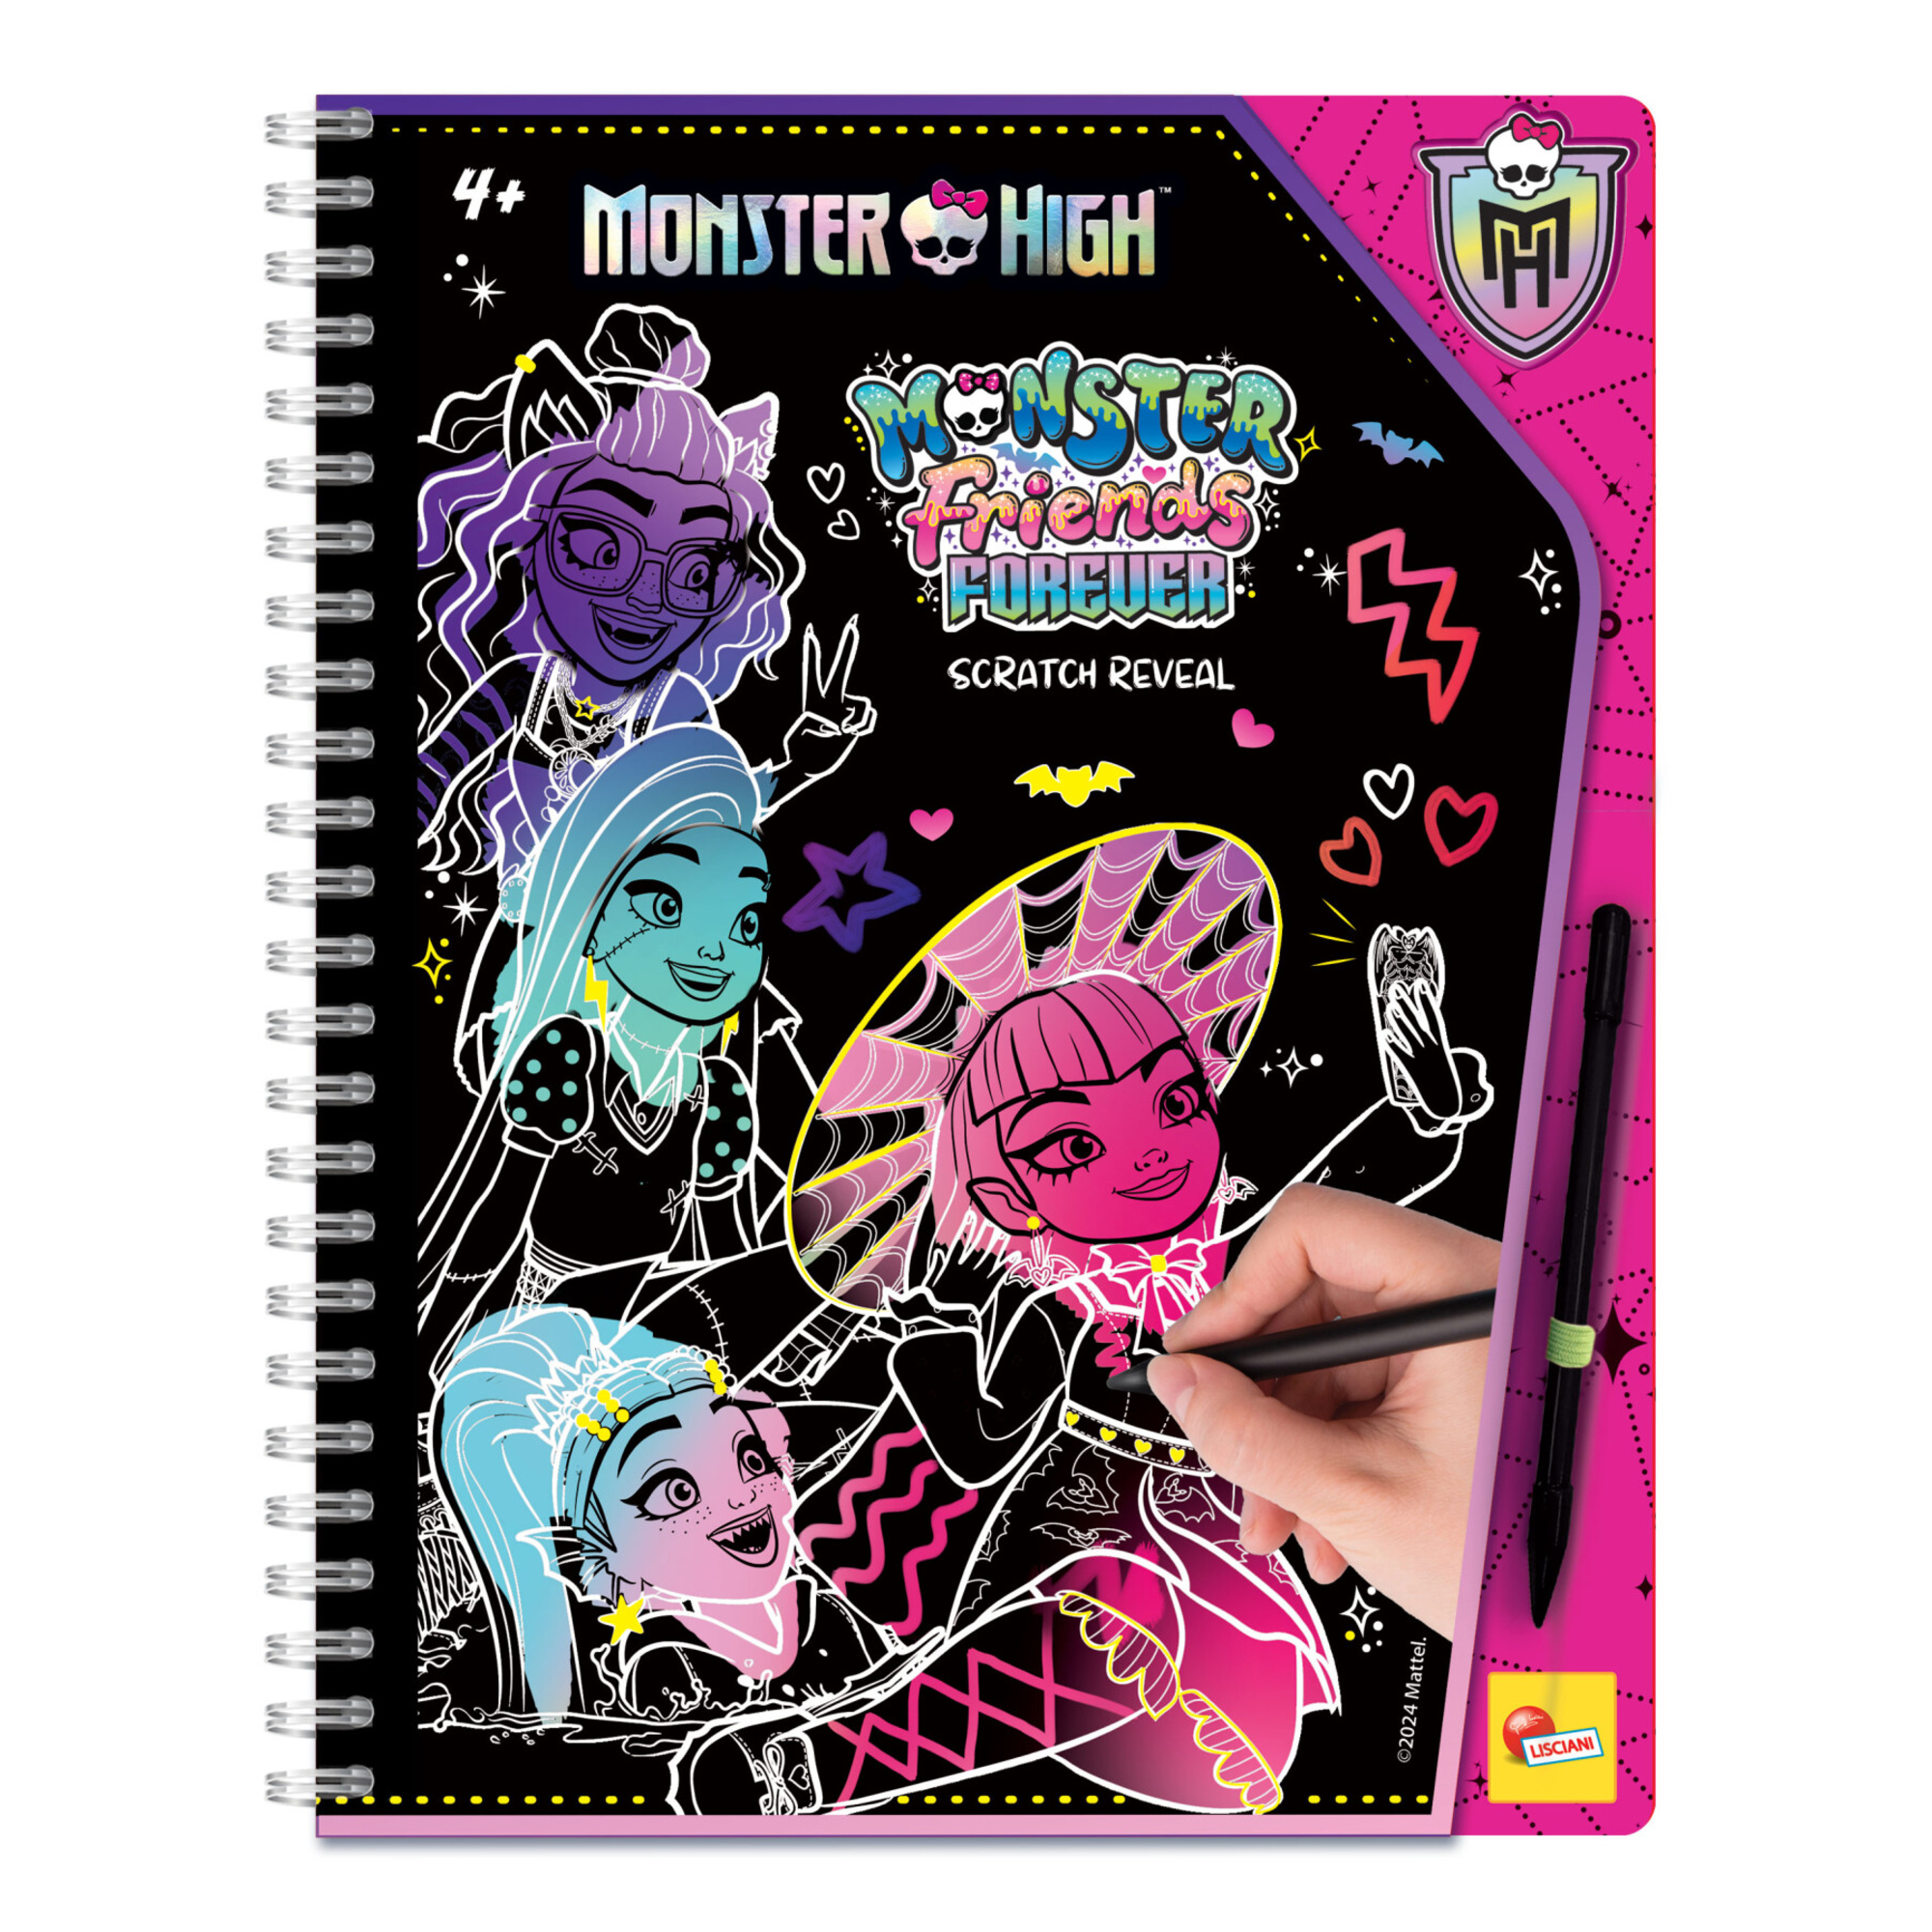 Monster high sketchbook monster friends forever scratch reveal - LISCIANI, Monster High